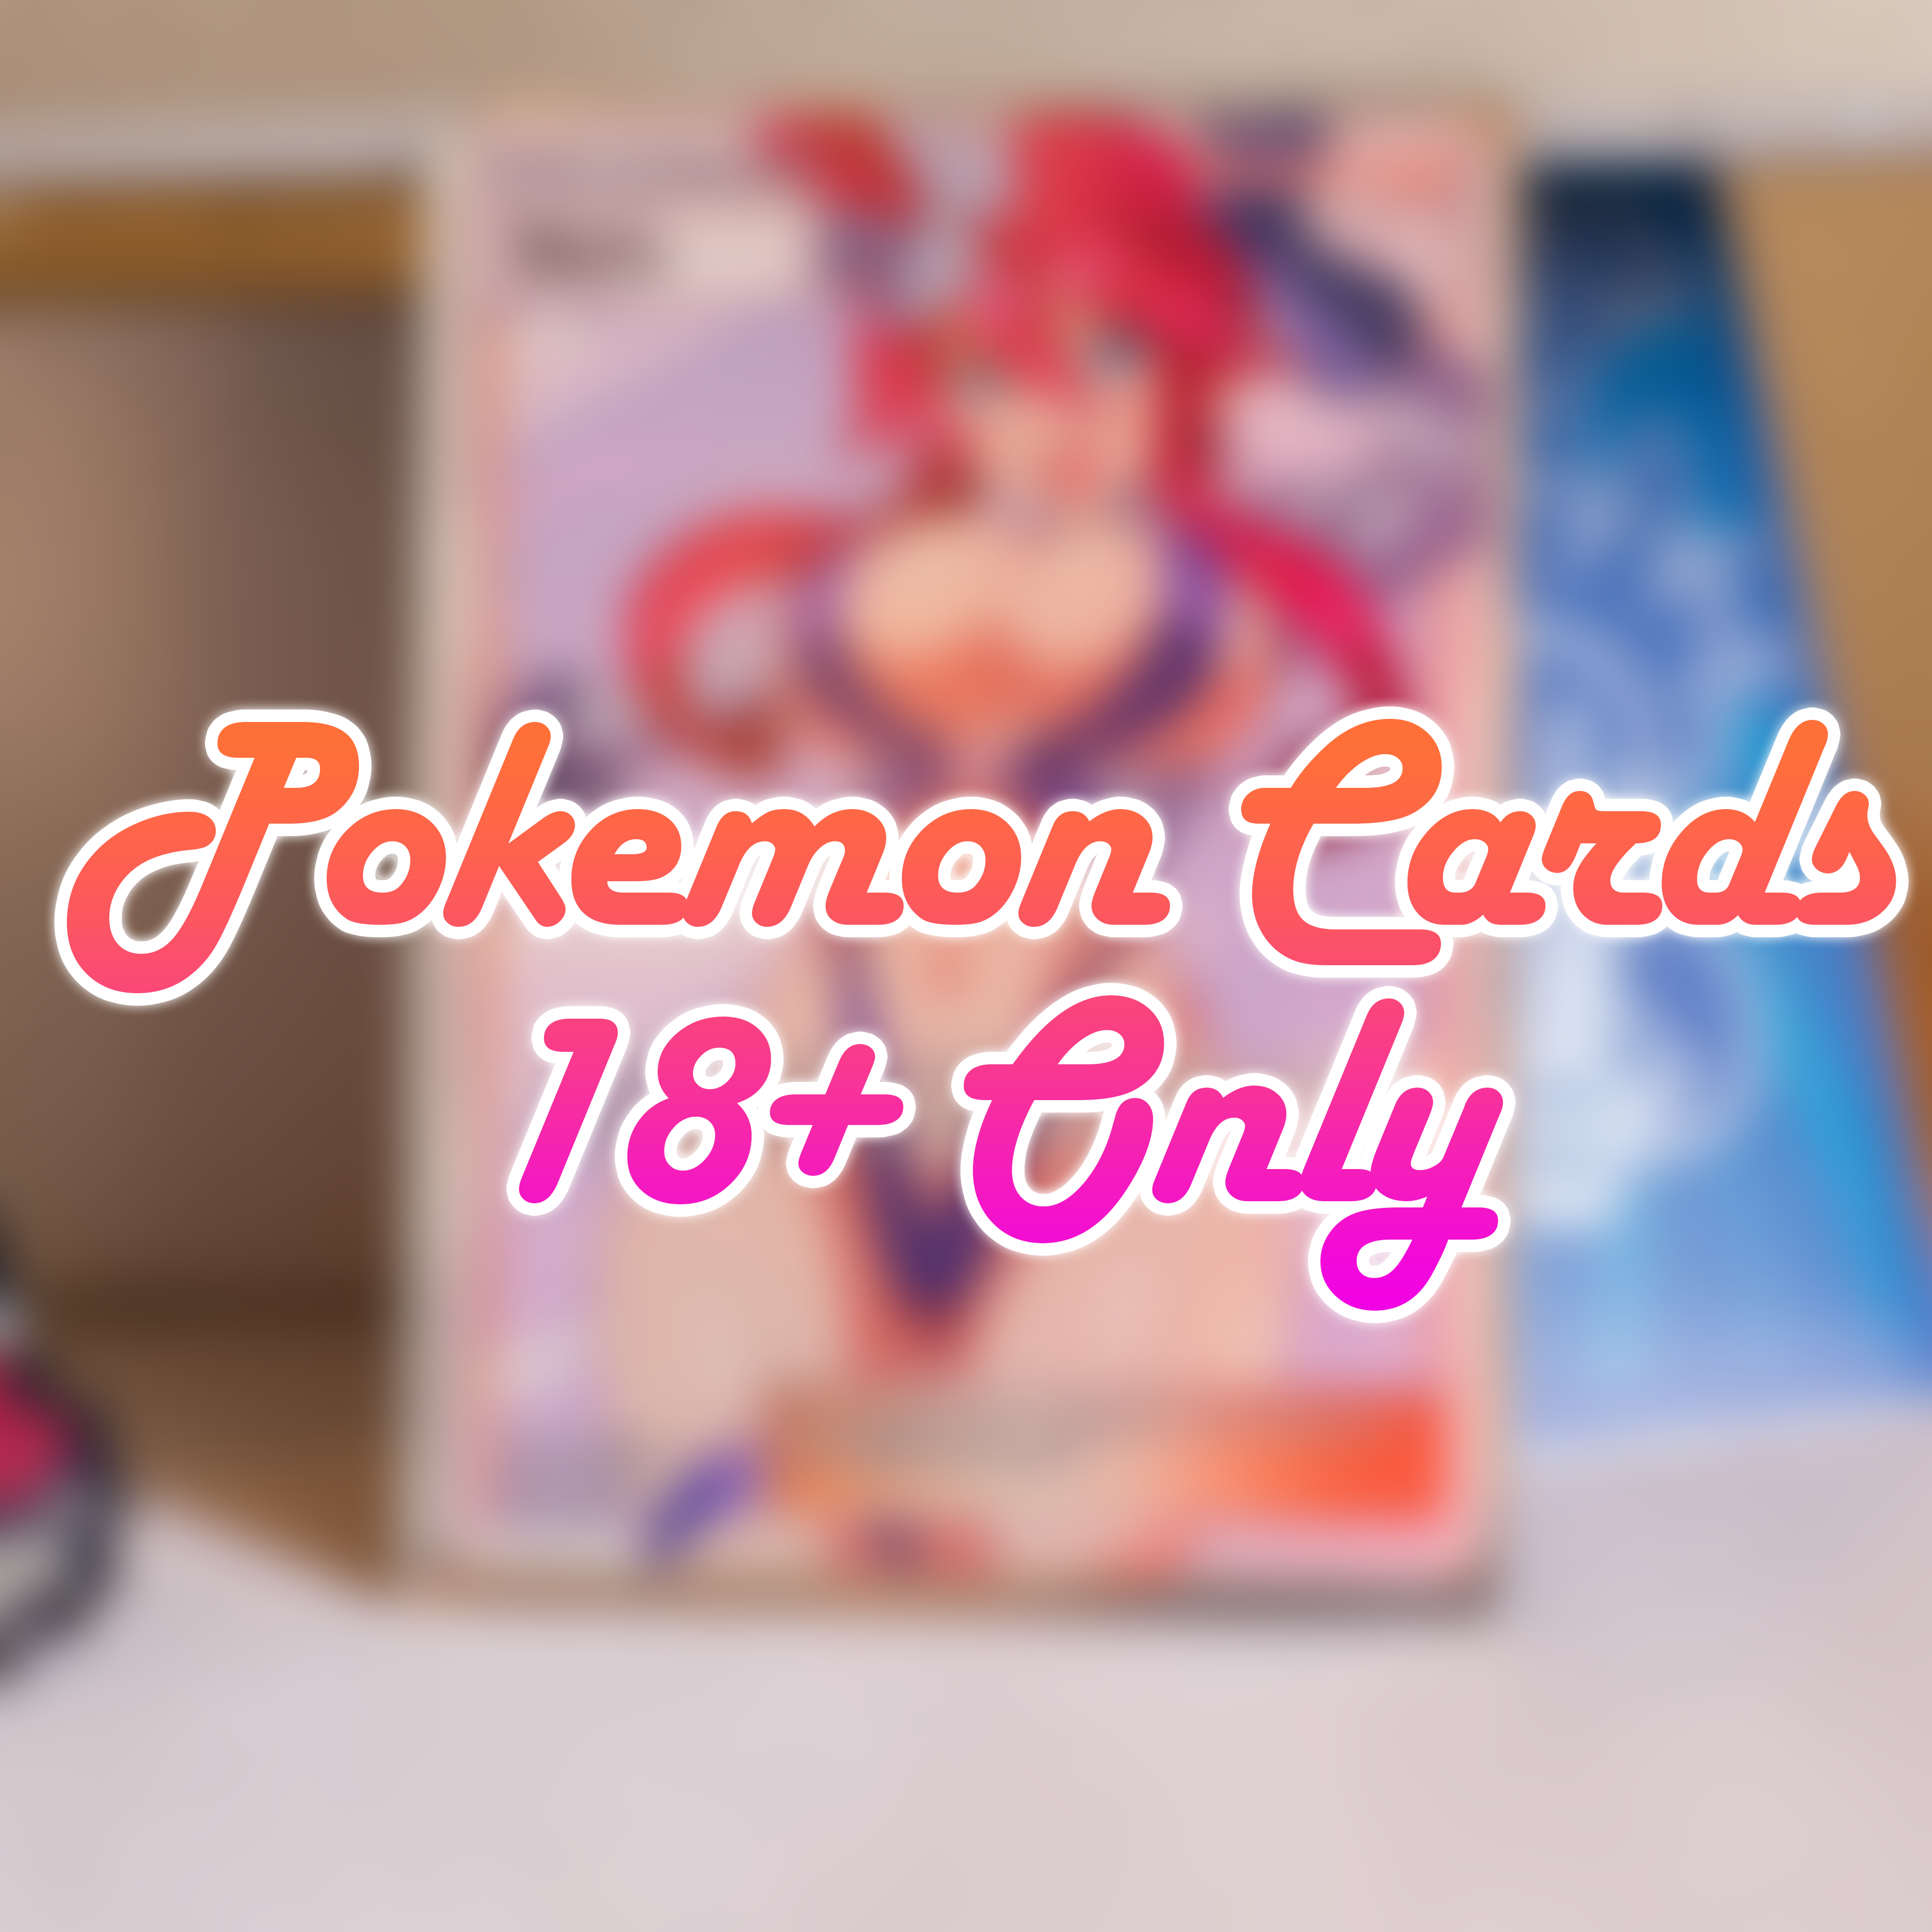 Pokemon Cards (18+)